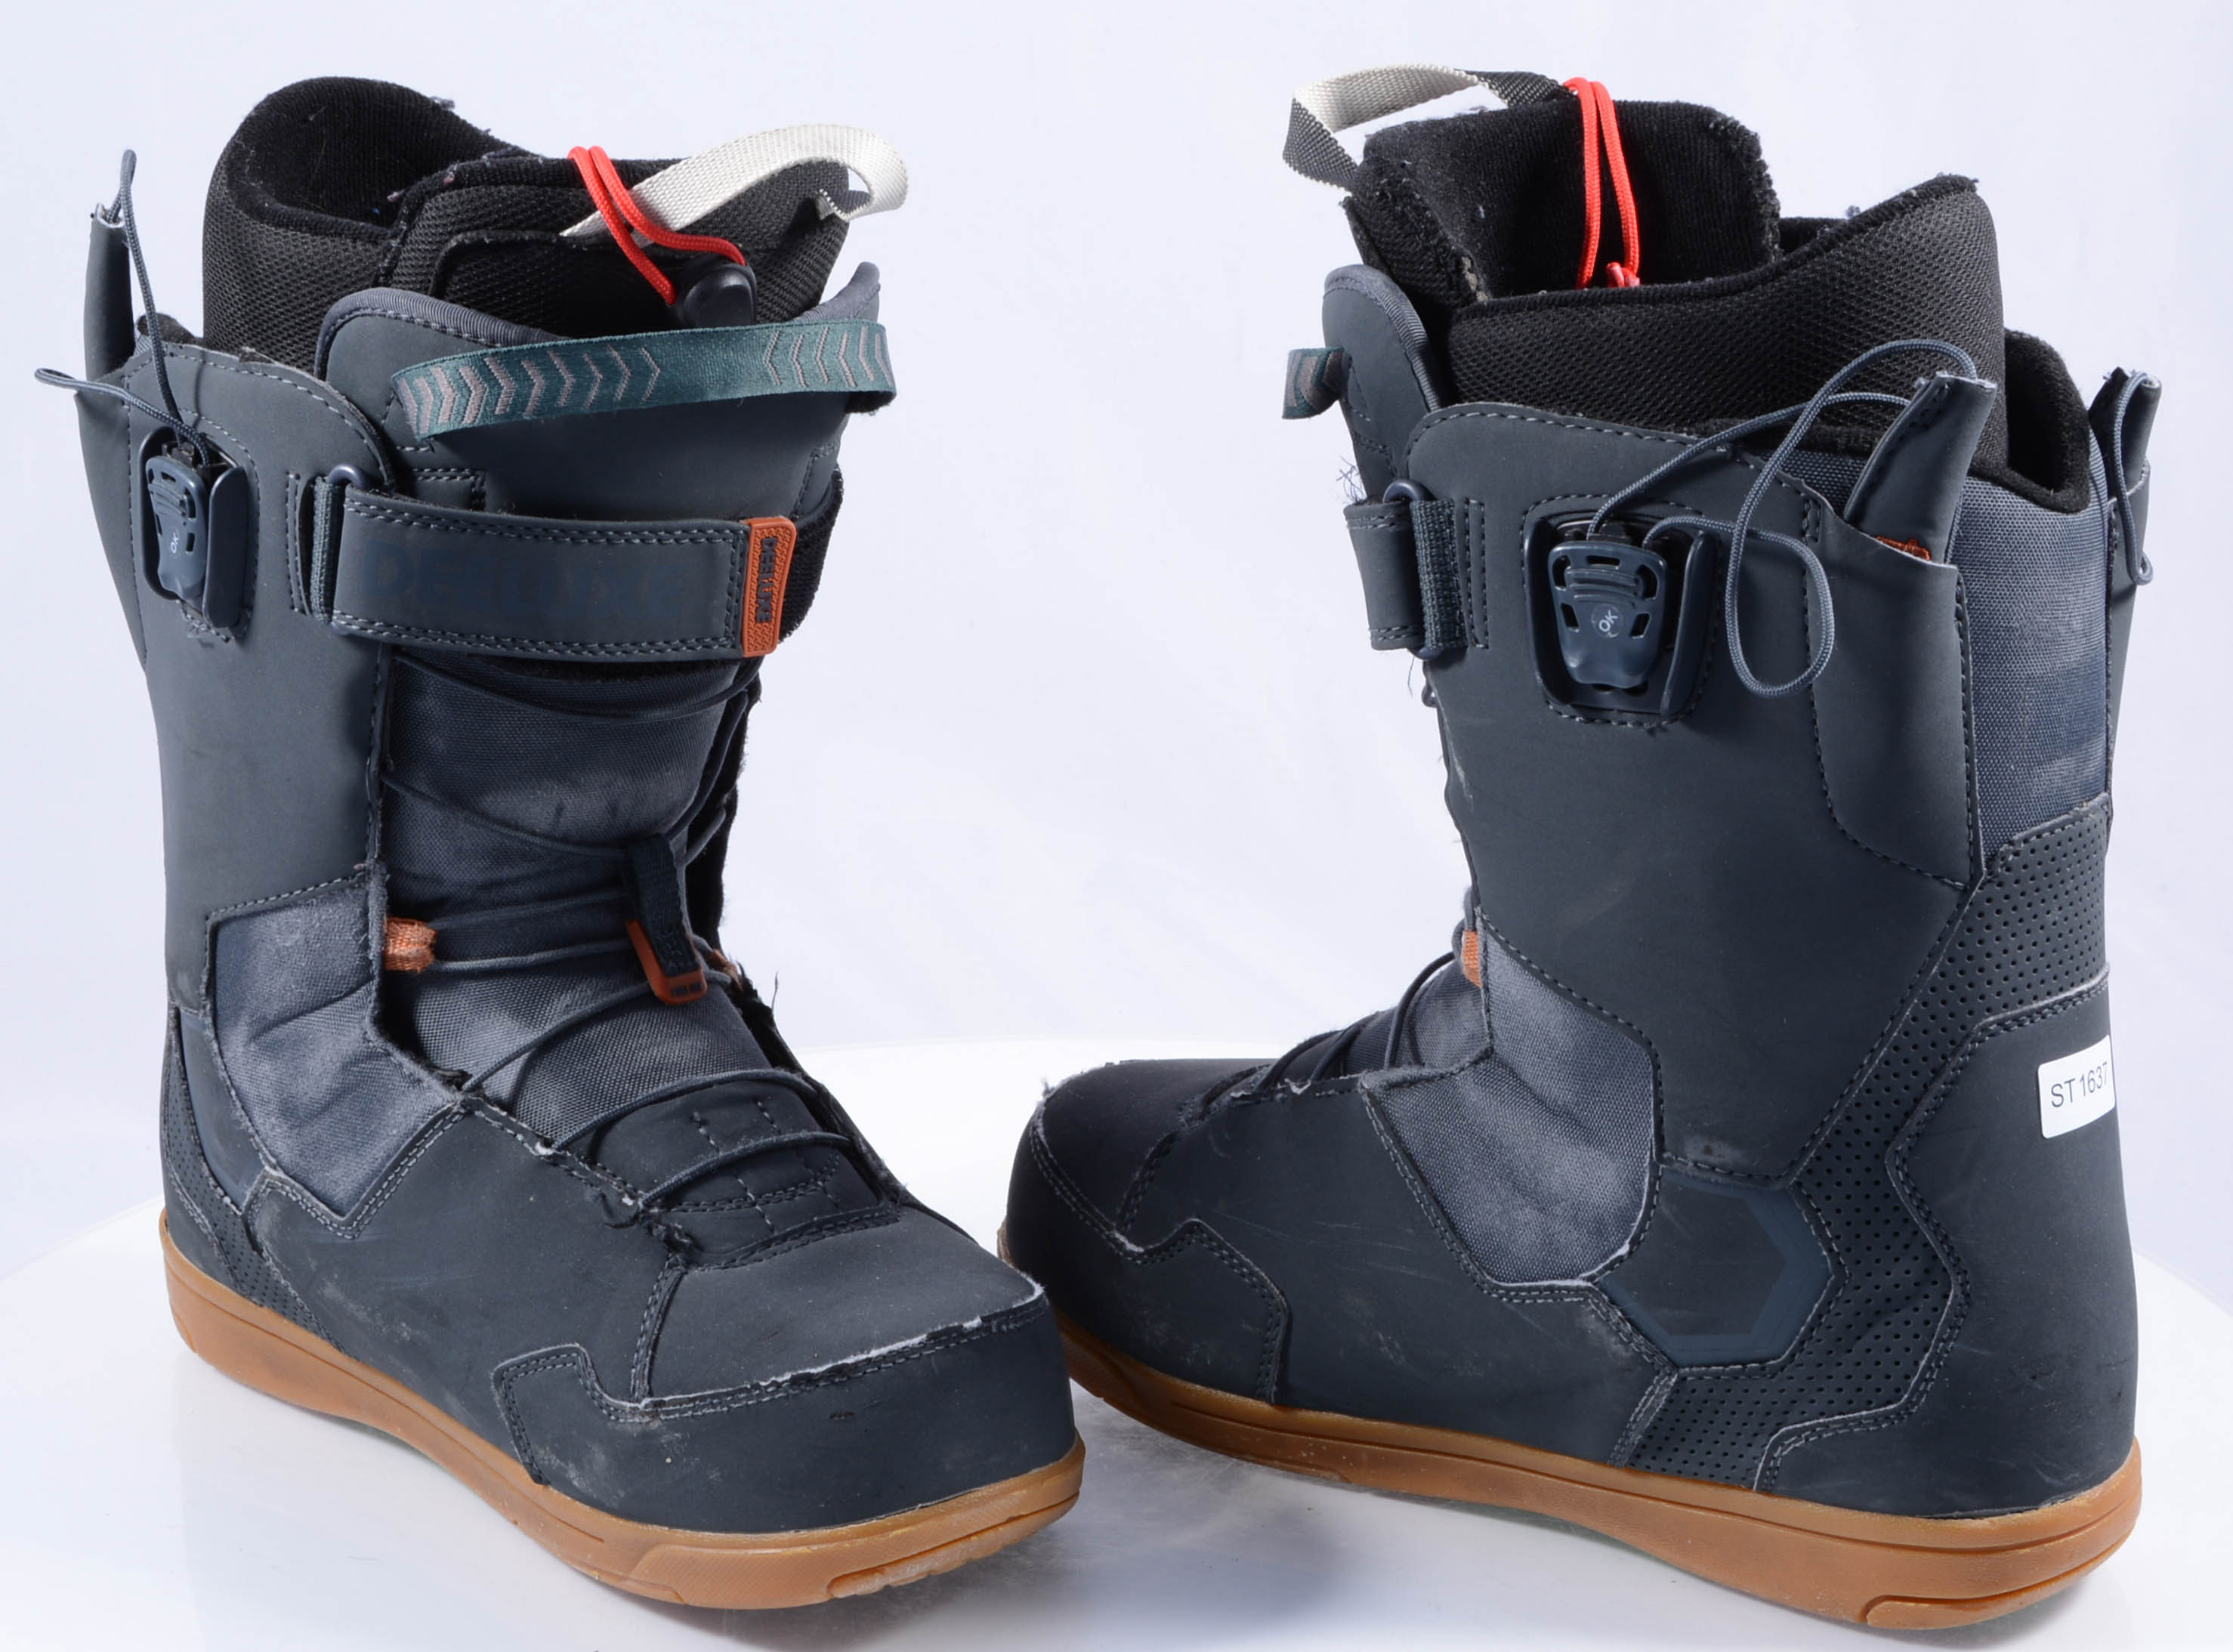 snowboard boots DEELUXE ID 7.1 CF, grey - Mardosport.com